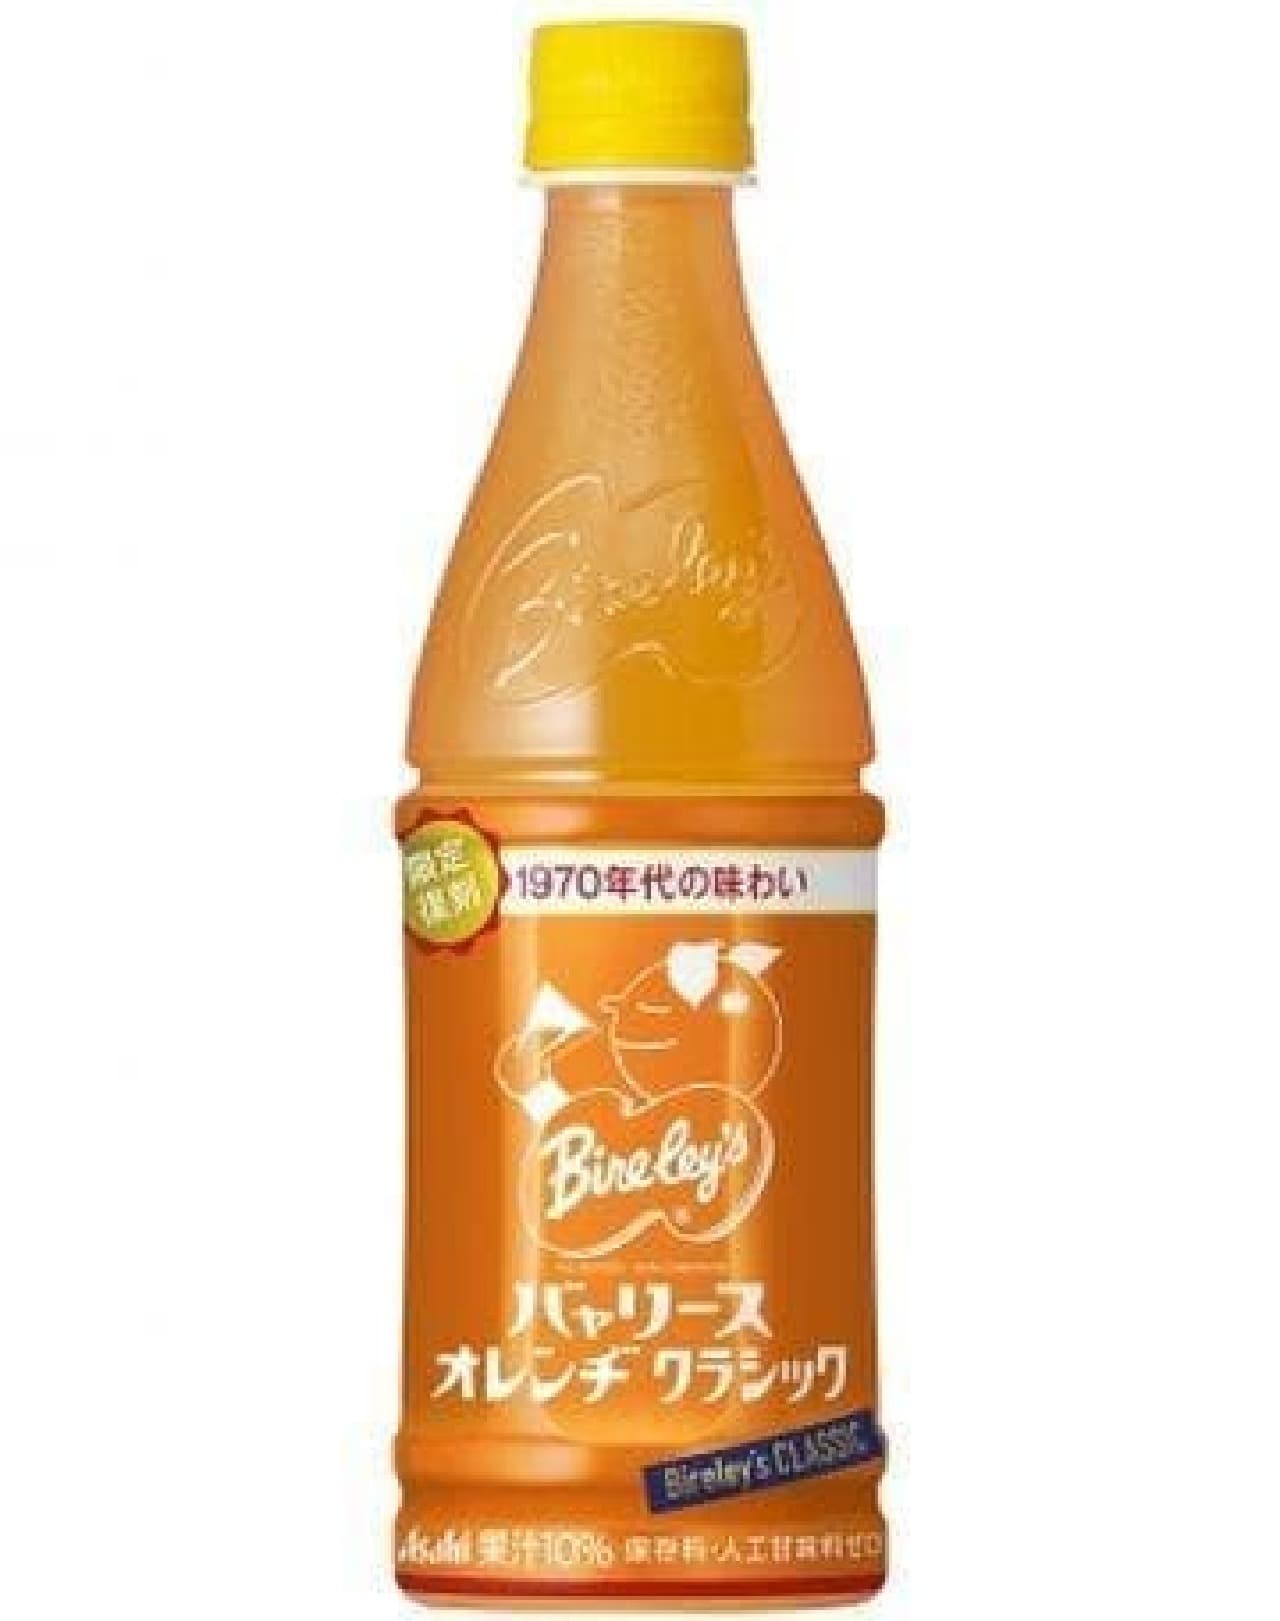 Asahi Soft Drinks "Balary's Orange Classic"